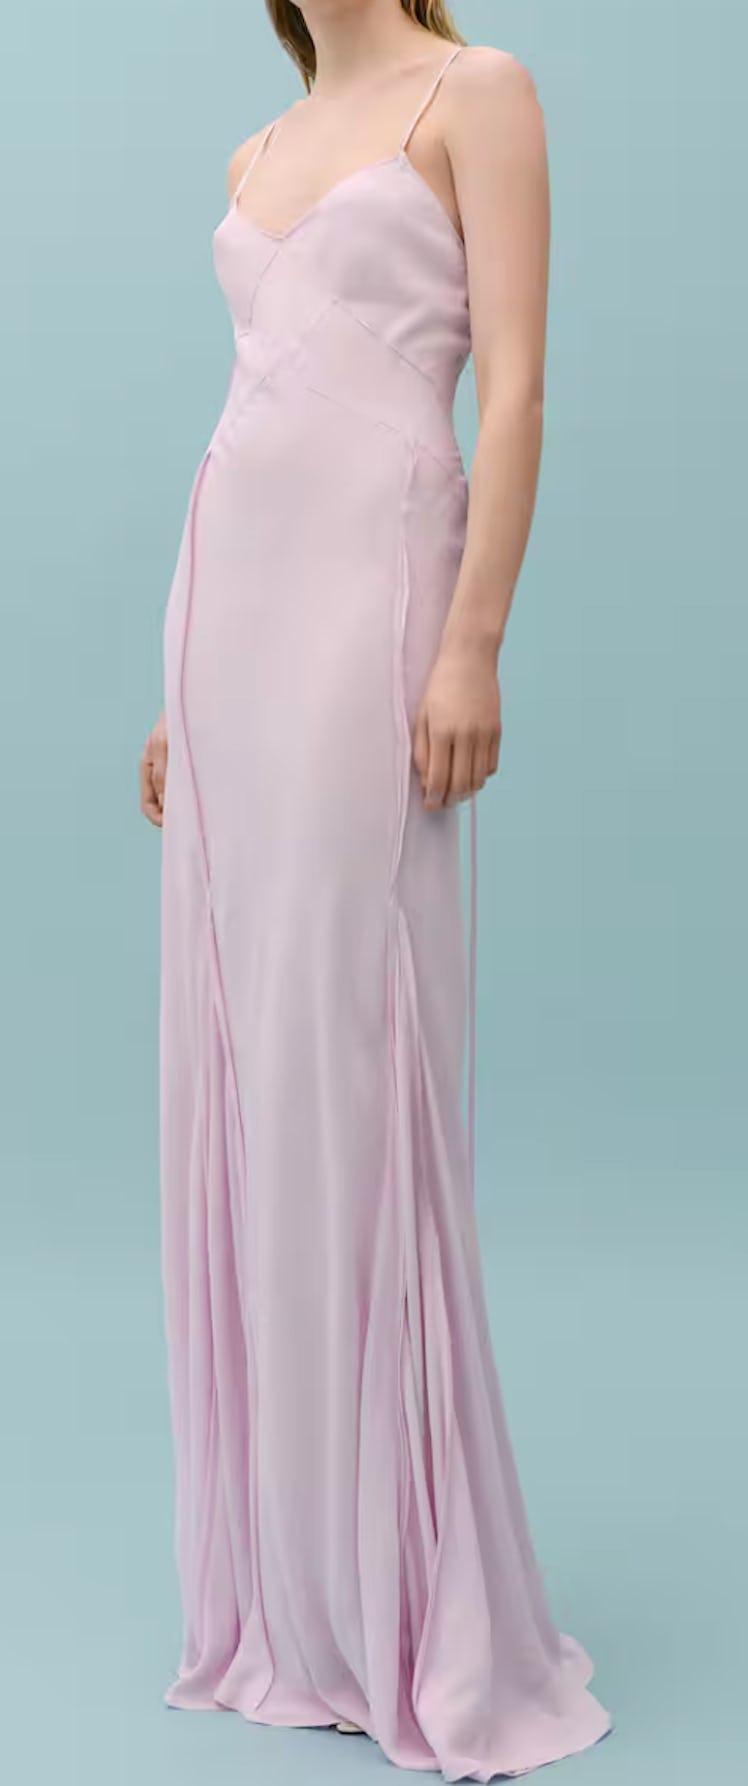 pale pink silk slip dress